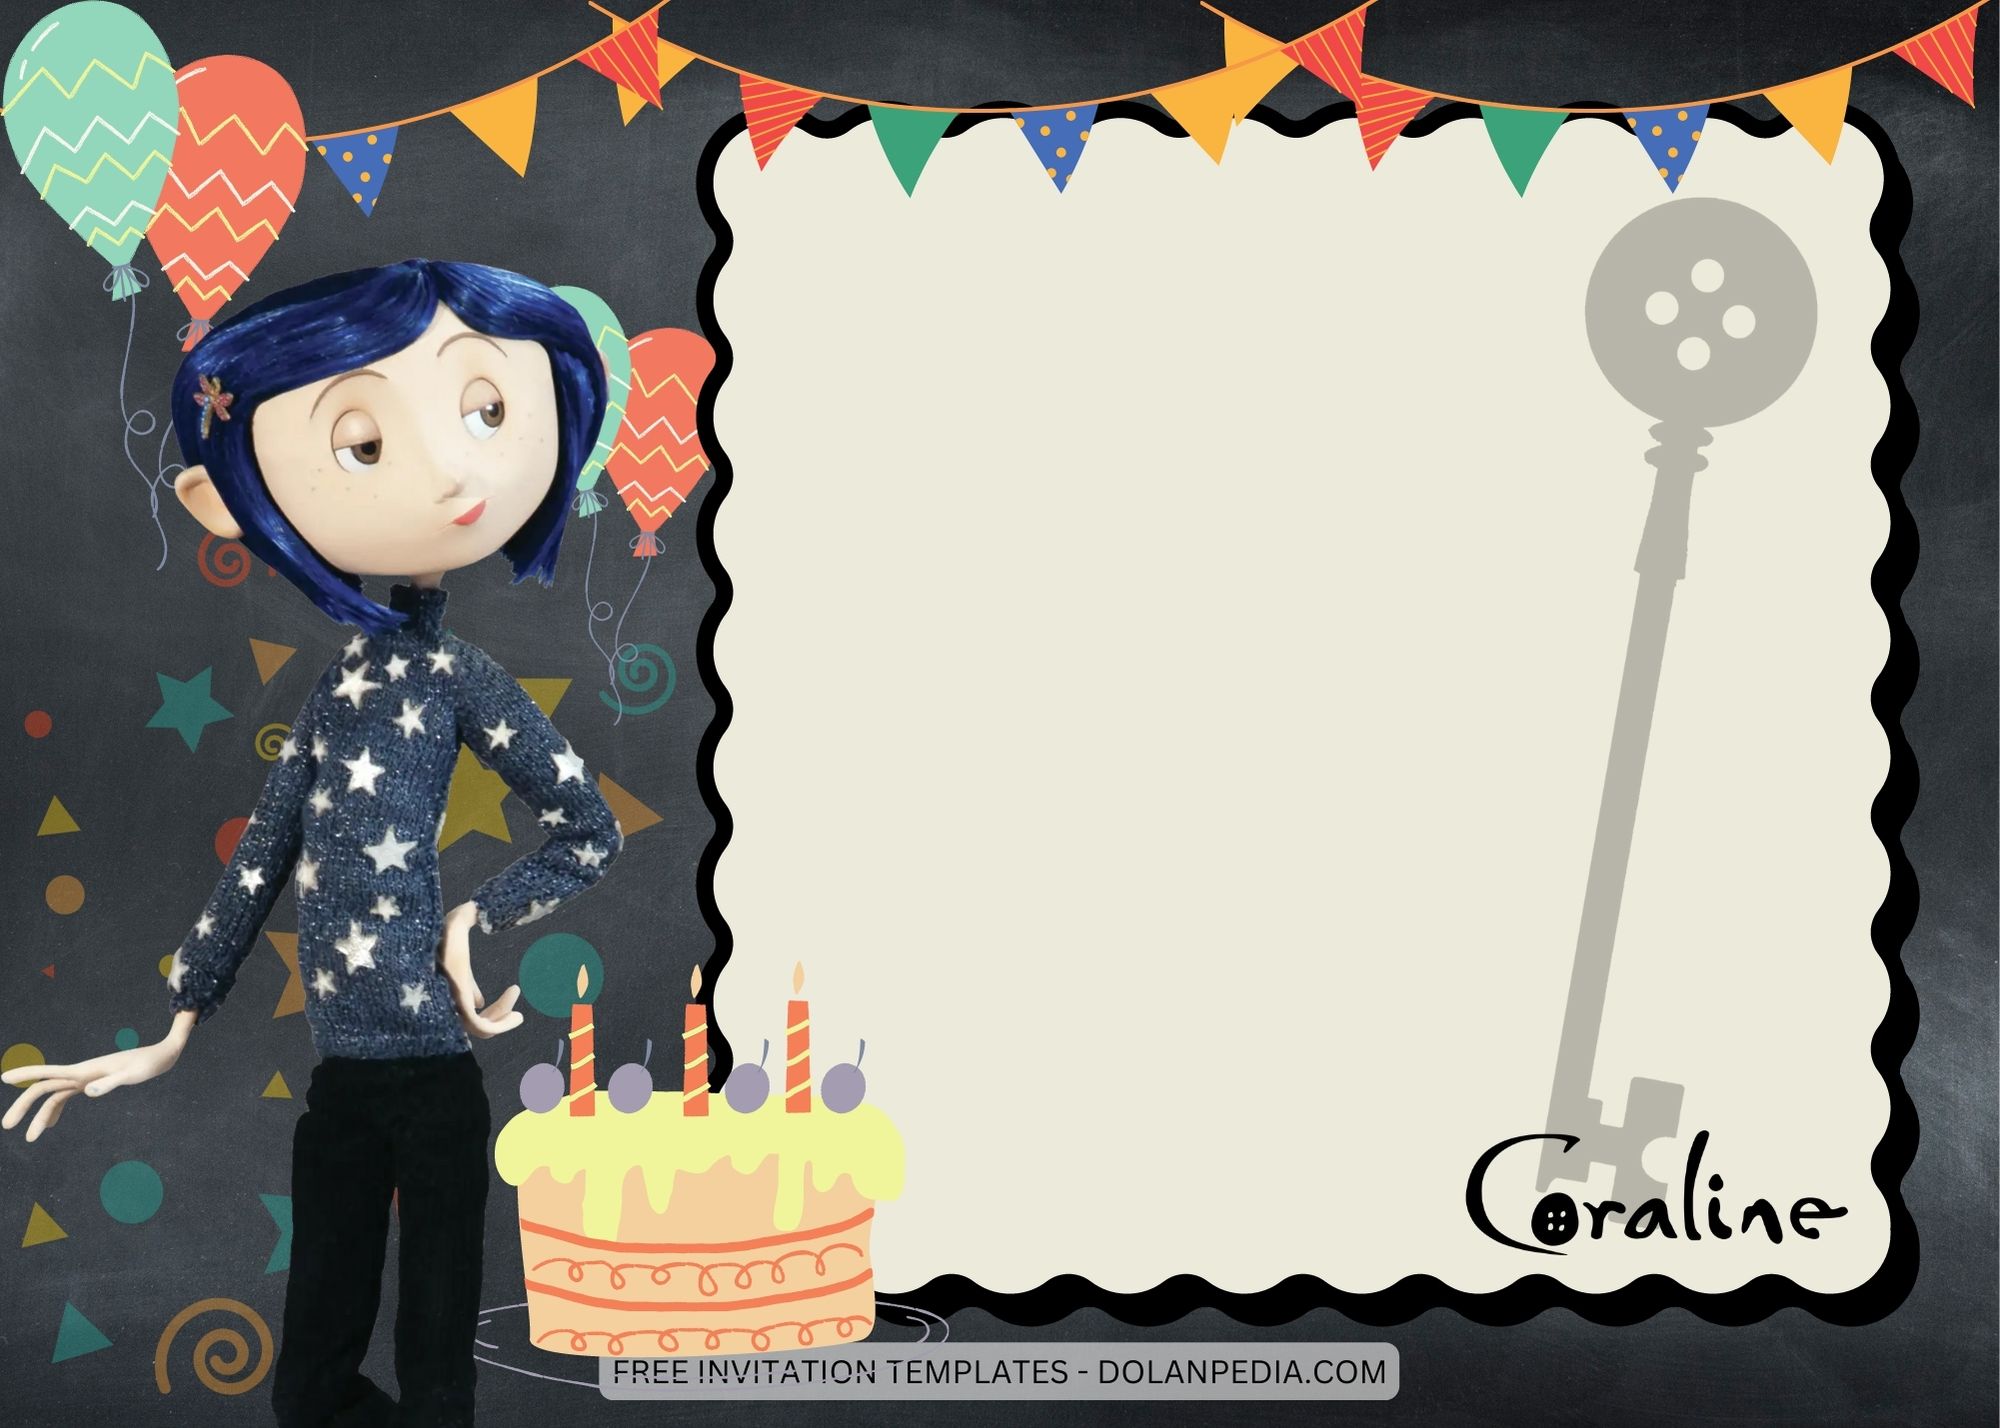 Blank Coraline Birthday Invitation Templates Six